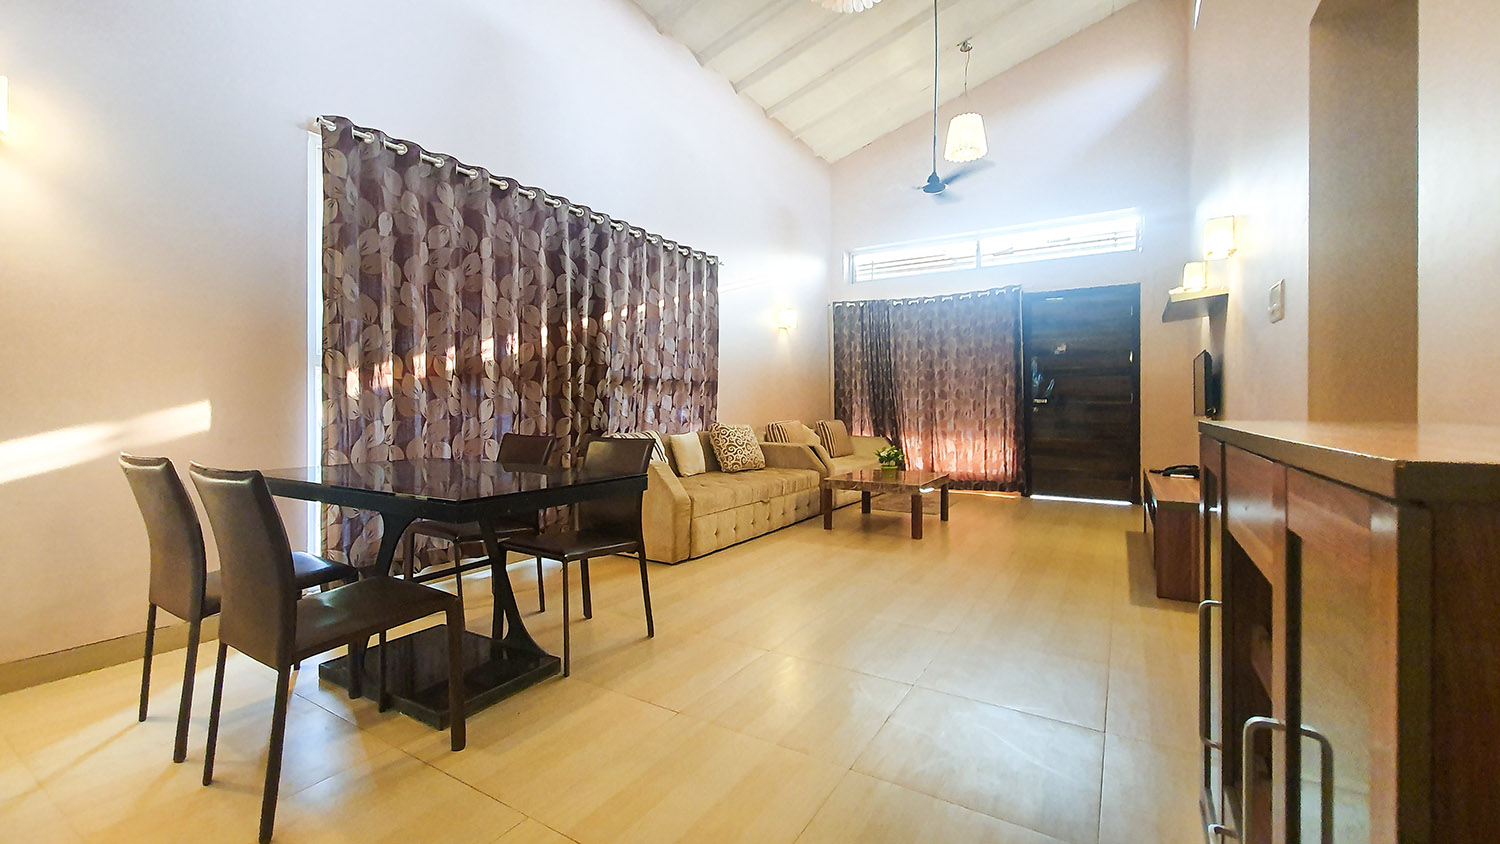 Best Villas in Igatpuri for Family and Friends near Mumbai | Rainforest Resort and Spa, Igatpuri, Nashik